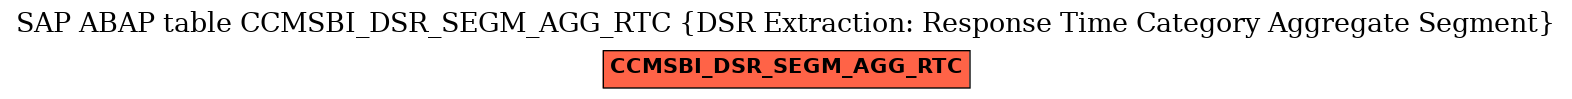 E-R Diagram for table CCMSBI_DSR_SEGM_AGG_RTC (DSR Extraction: Response Time Category Aggregate Segment)